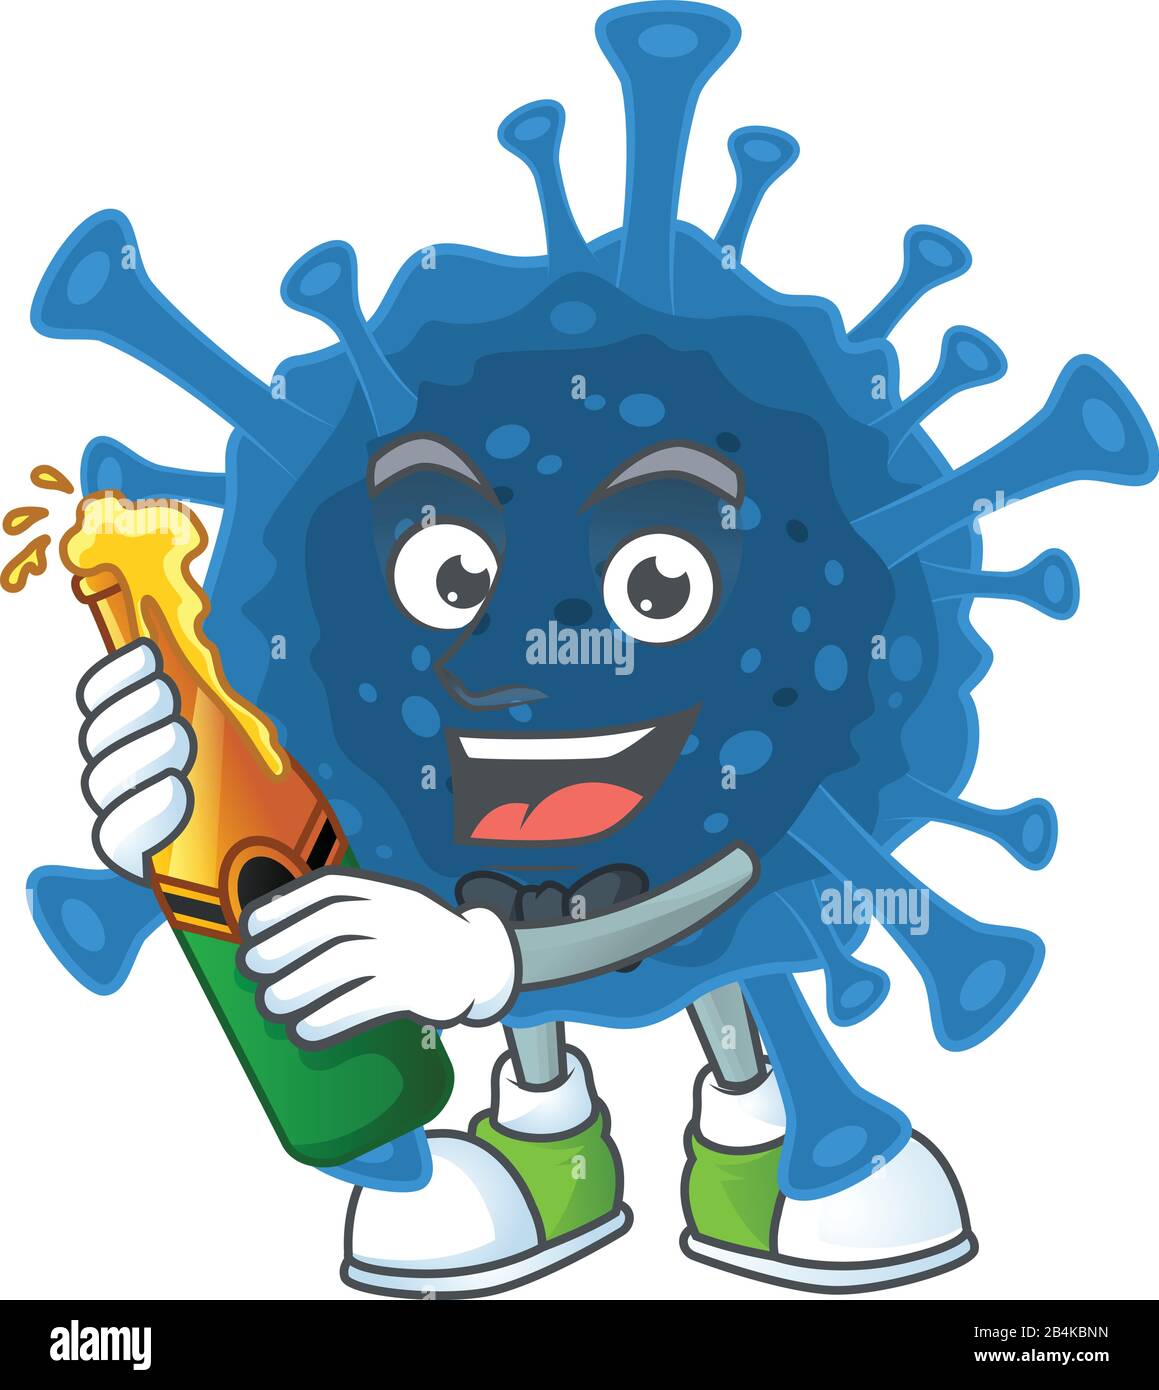 mascot cartoon design of coronavirus desease having a bottle of beer Stock Vector